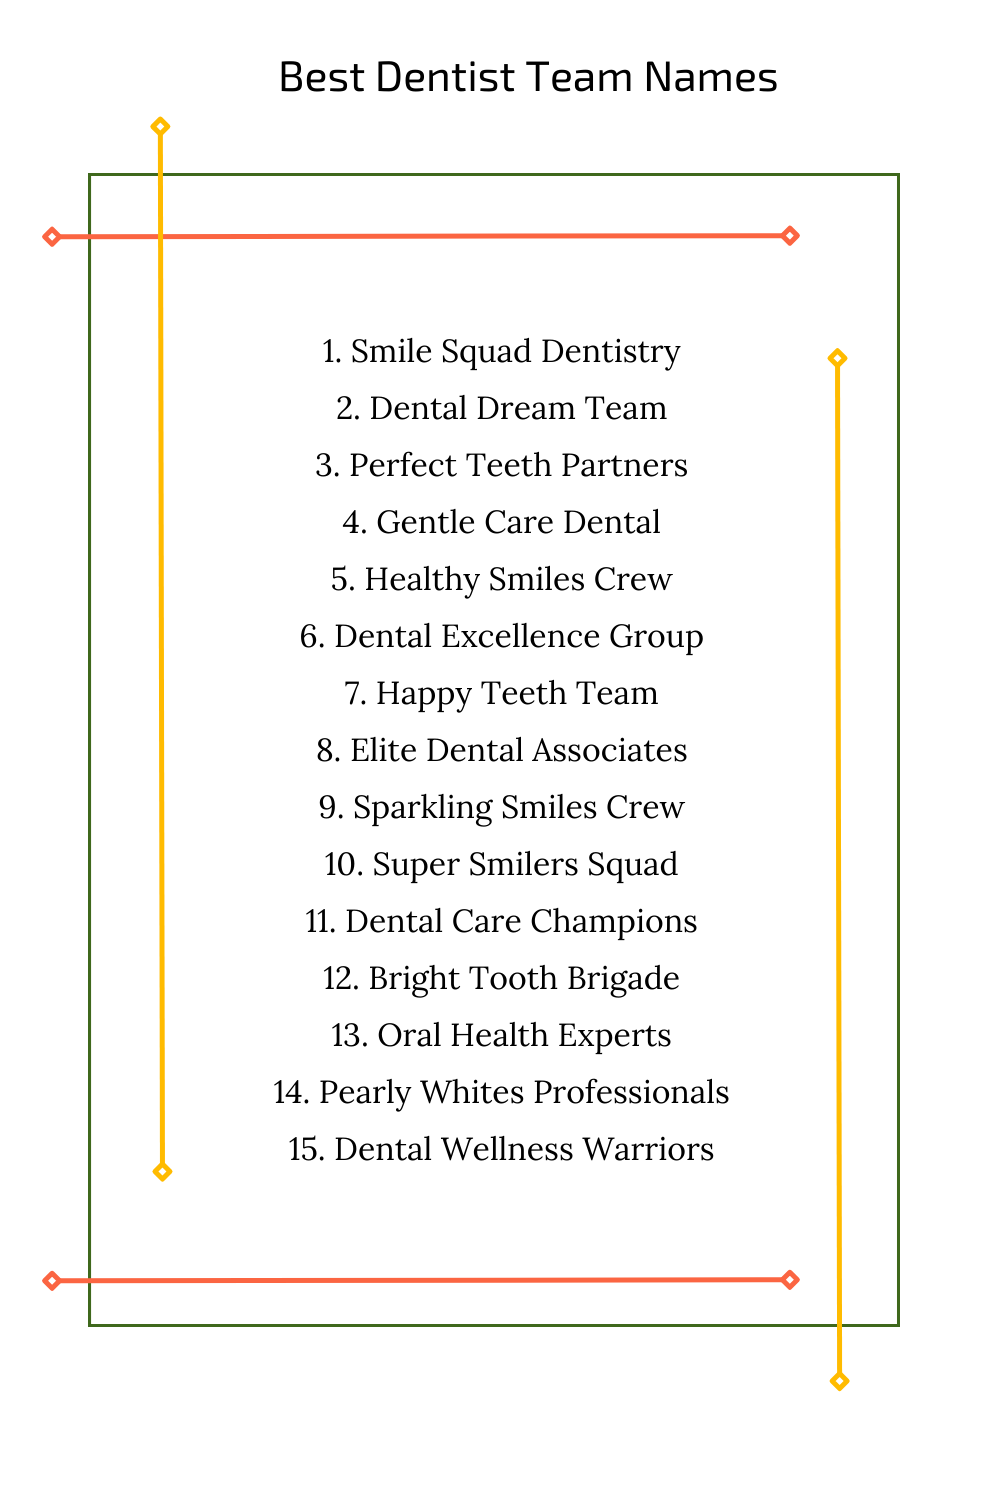 Best Dentist Team Names